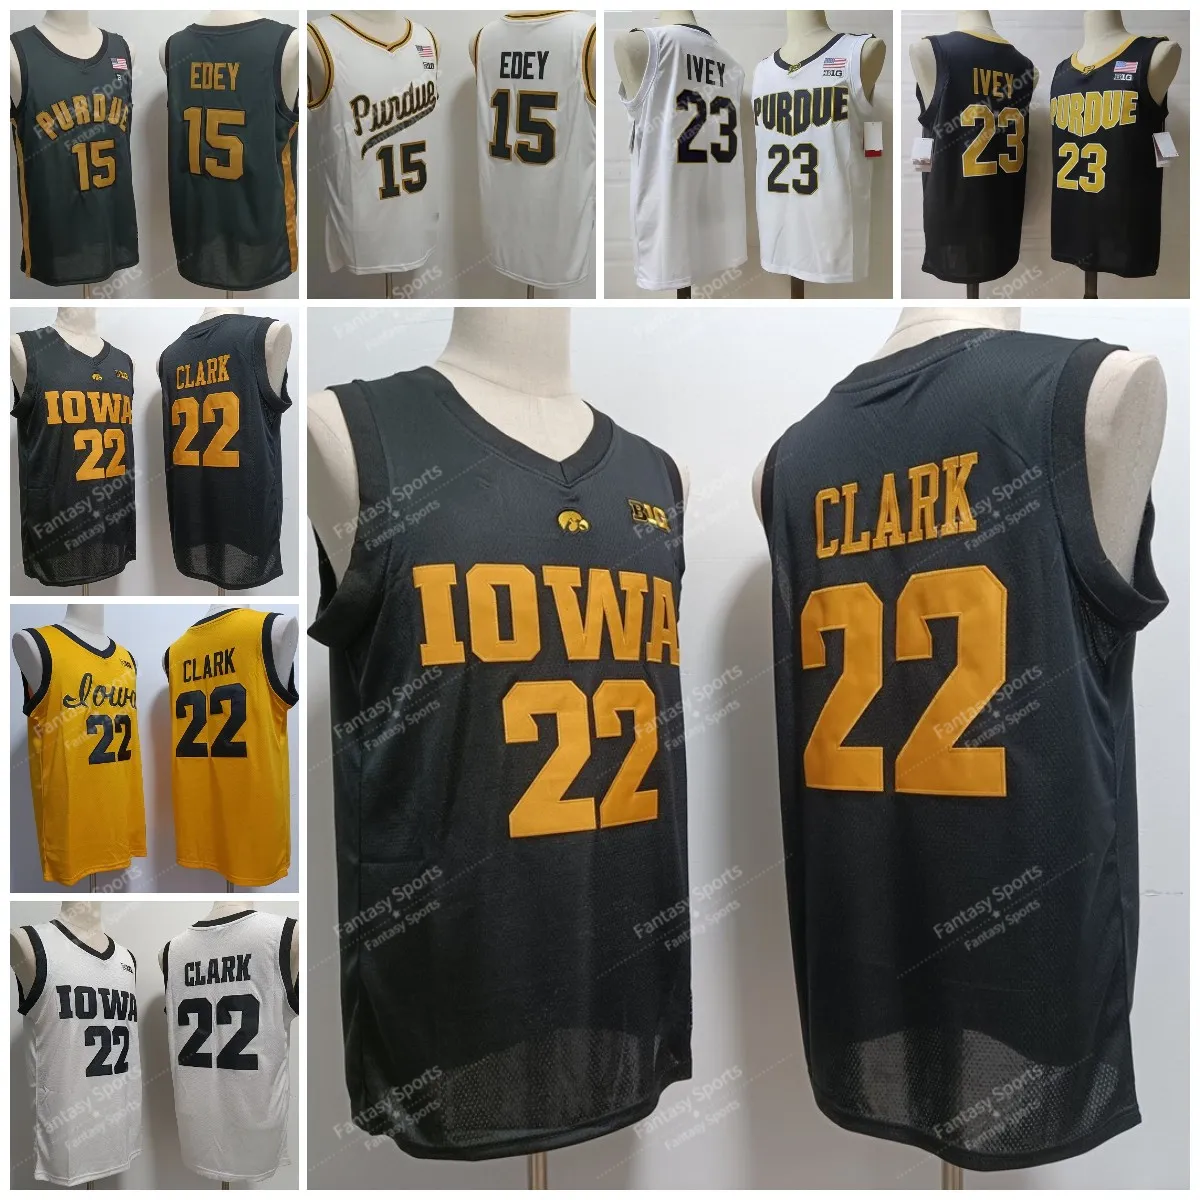 Iowa Hawkeyes 22 Caitlin Clark College Basketball Jersey Purdue Boilermakers 23 Jaden Ivey 15 Zach Edey White Black Ed Męskie koszulki